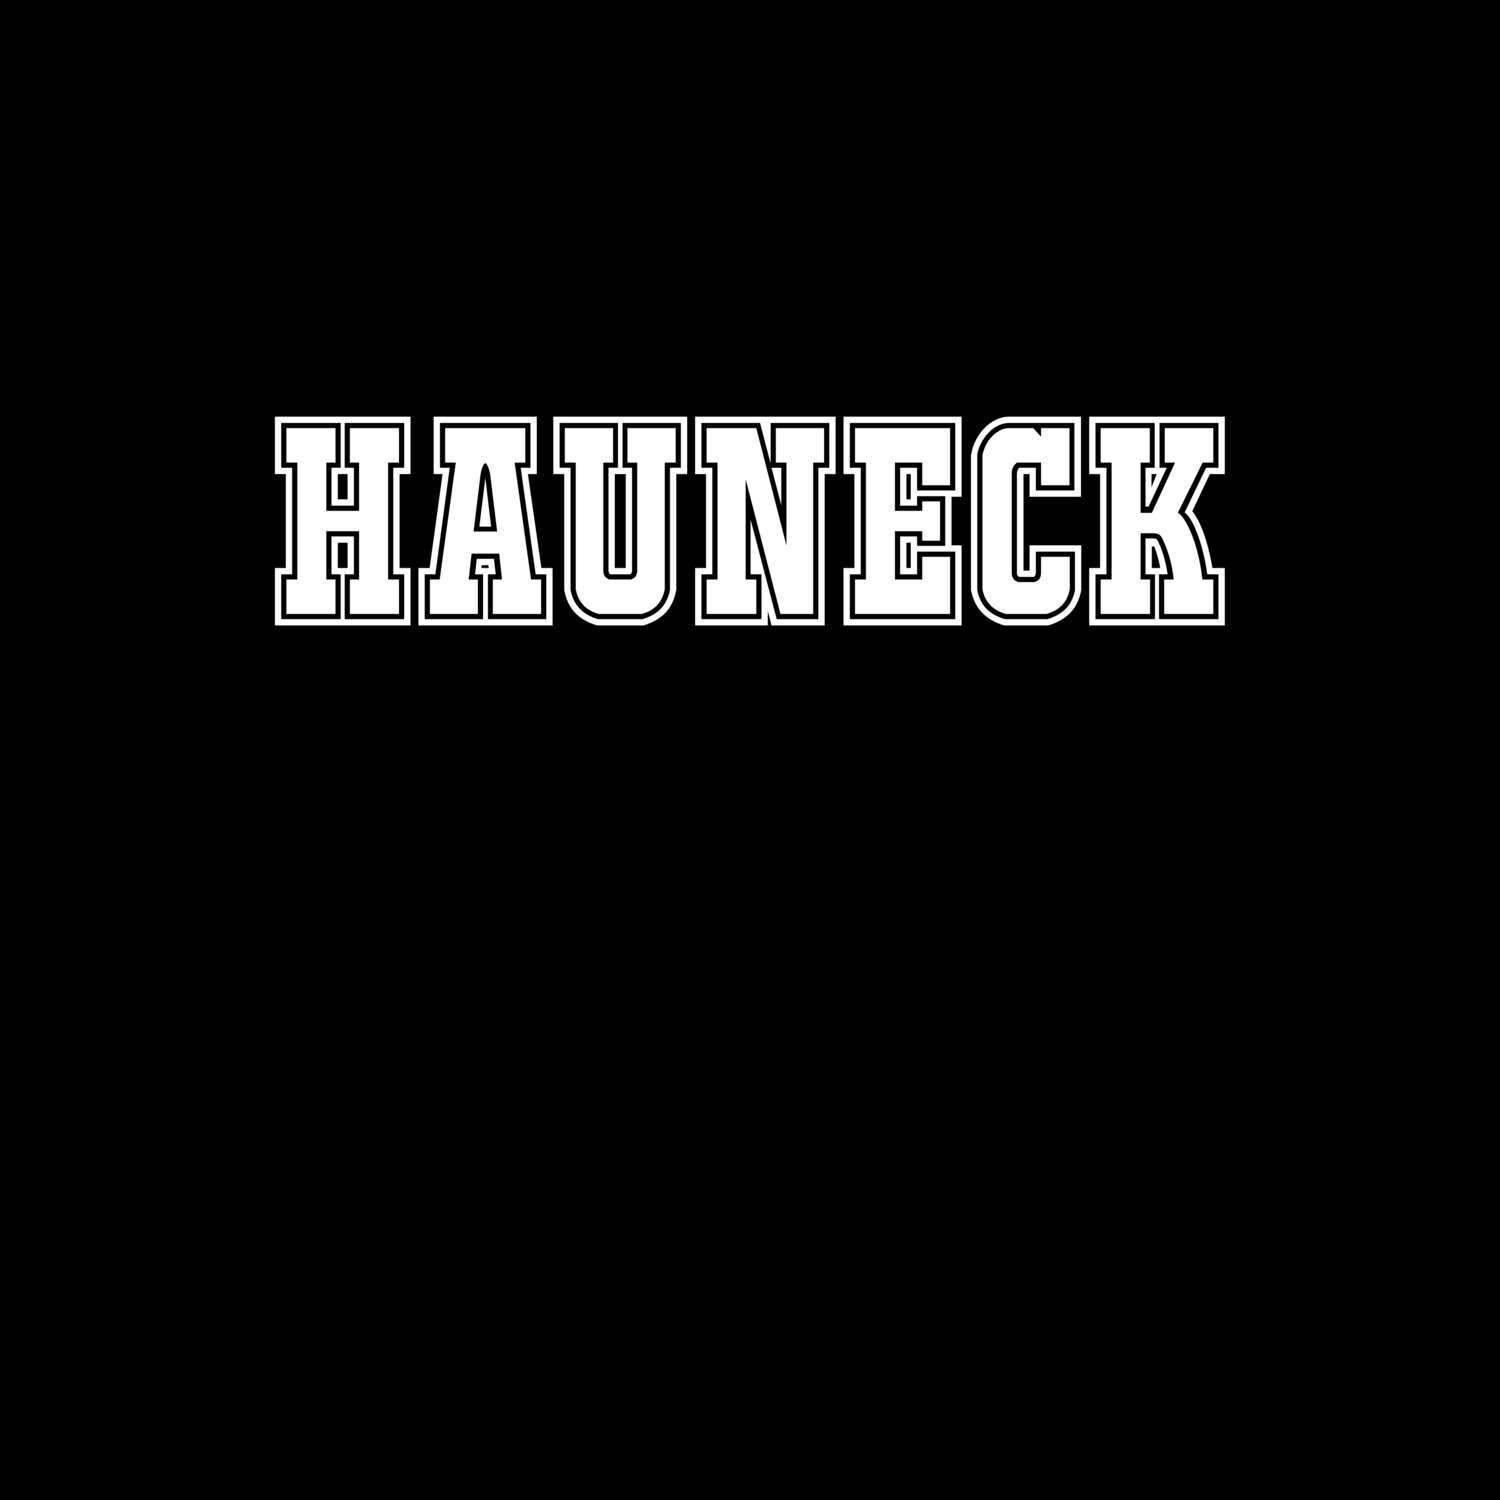 Hauneck T-Shirt »Classic«